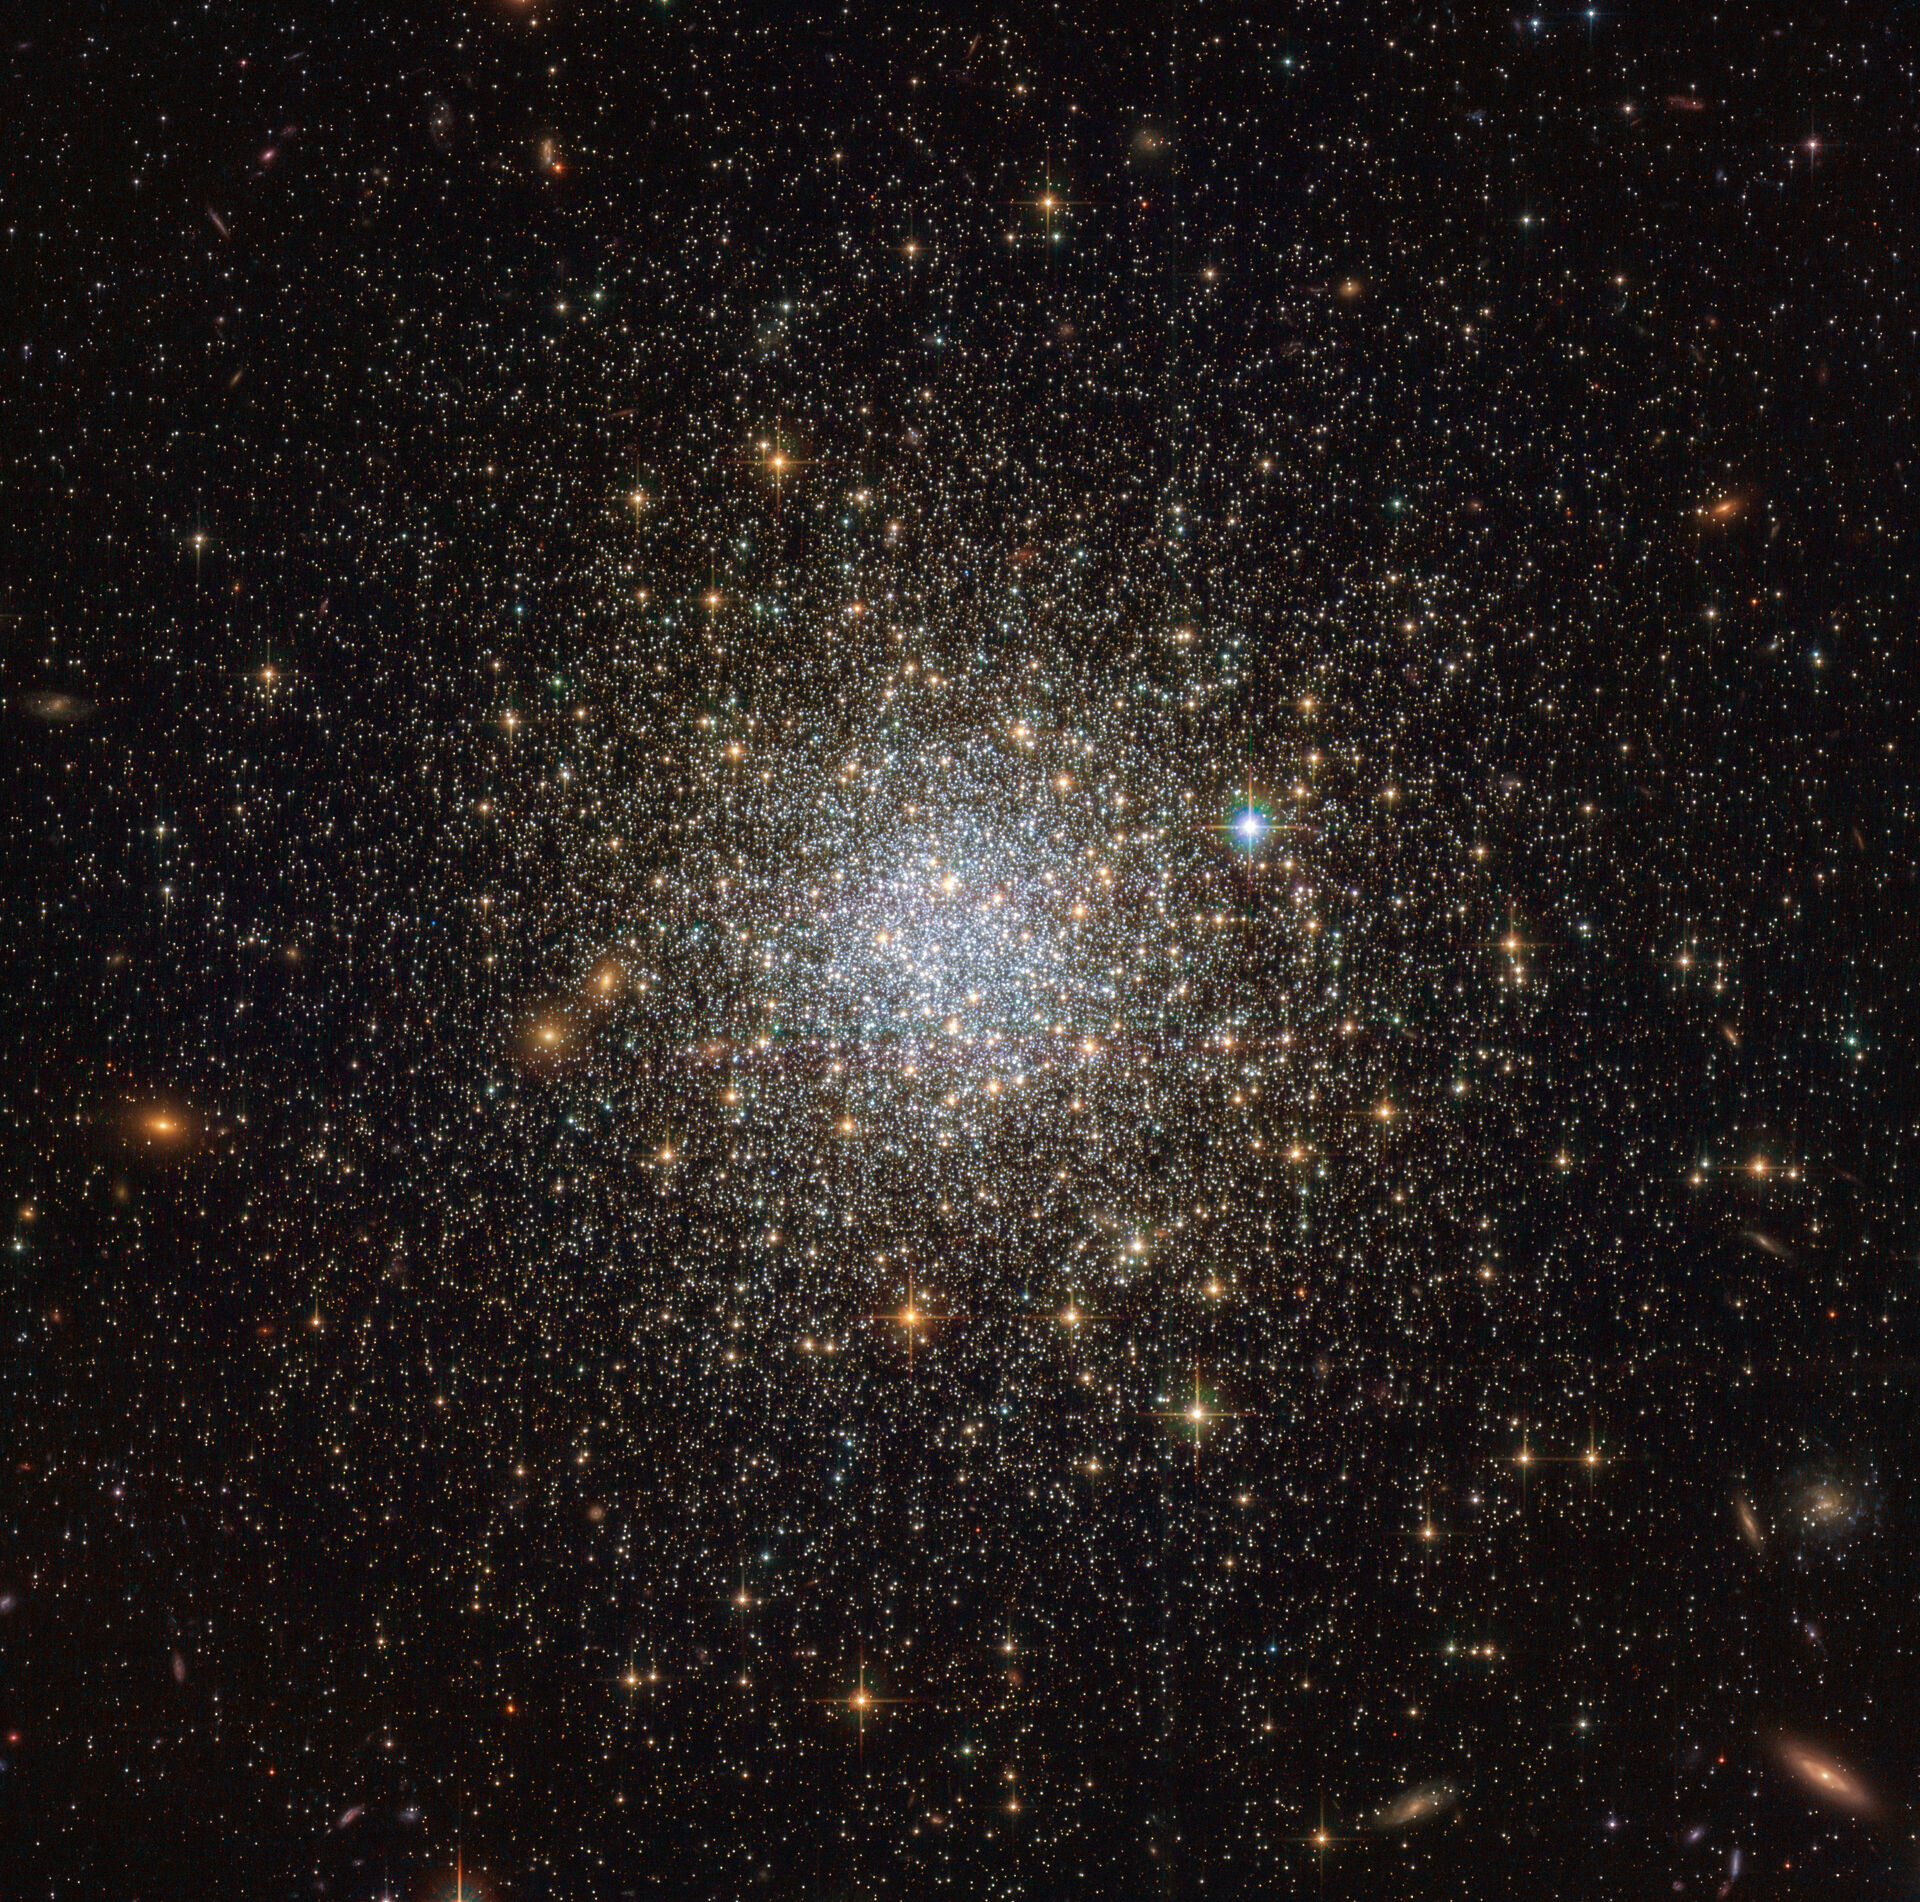 A globular cluster of stars